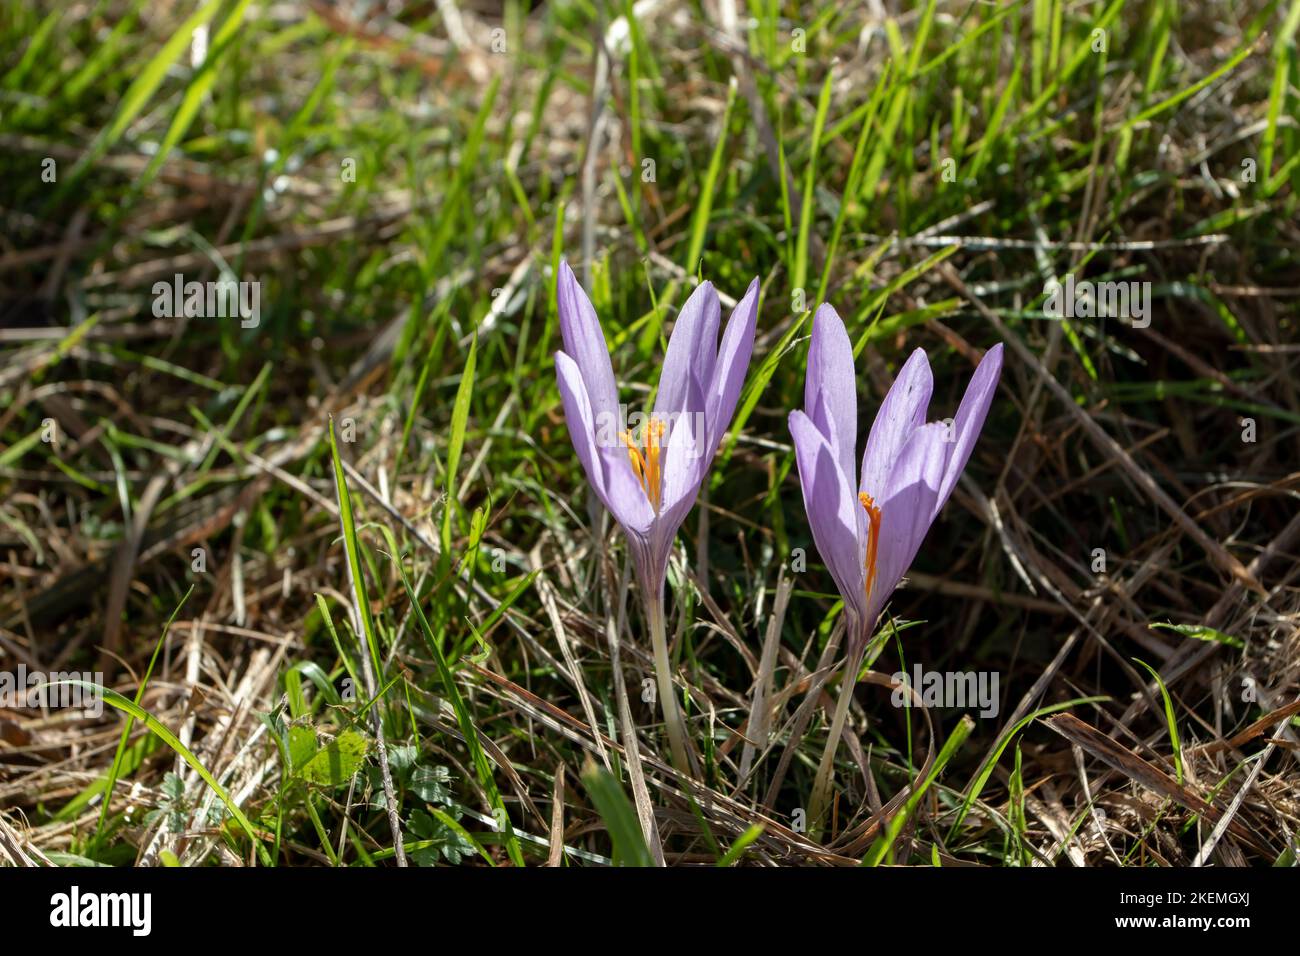 Colchicum autumnale, autumn crocus, meadow saffron purple flowers with bright orange anthers. Stock Photo